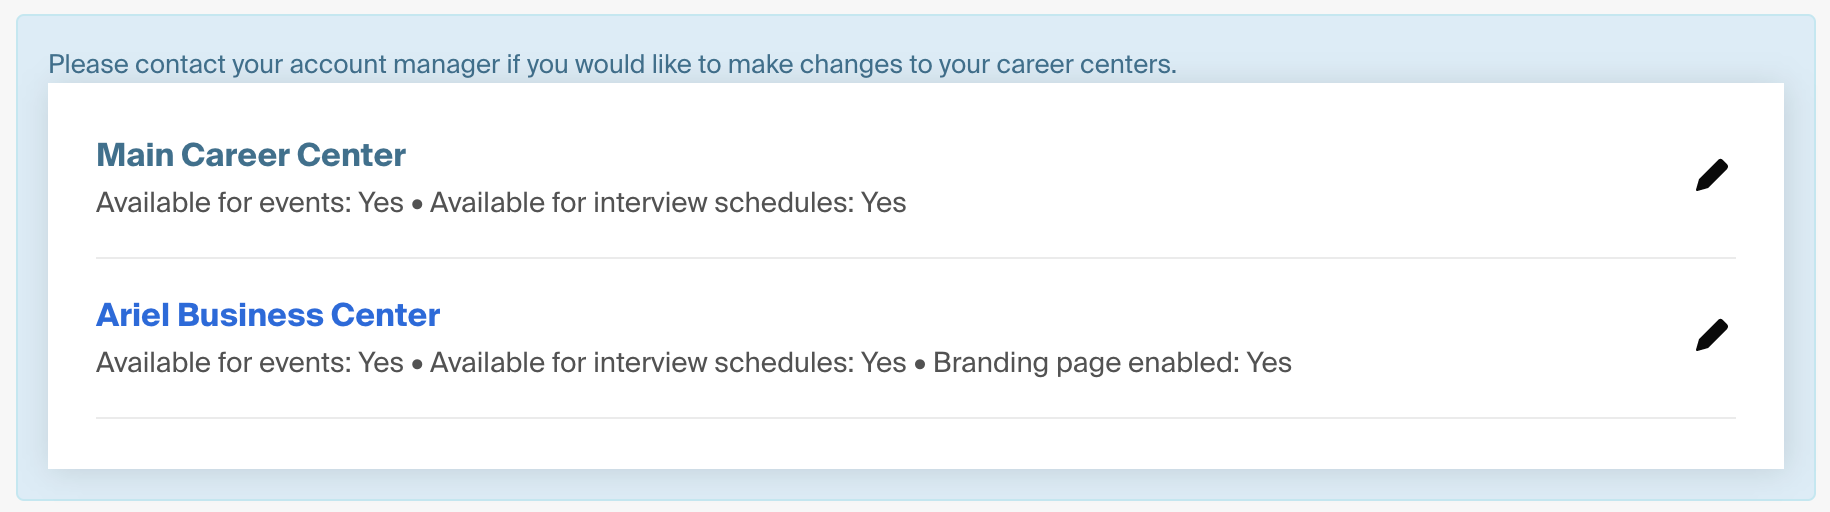 career_centers_in_school_settings.png